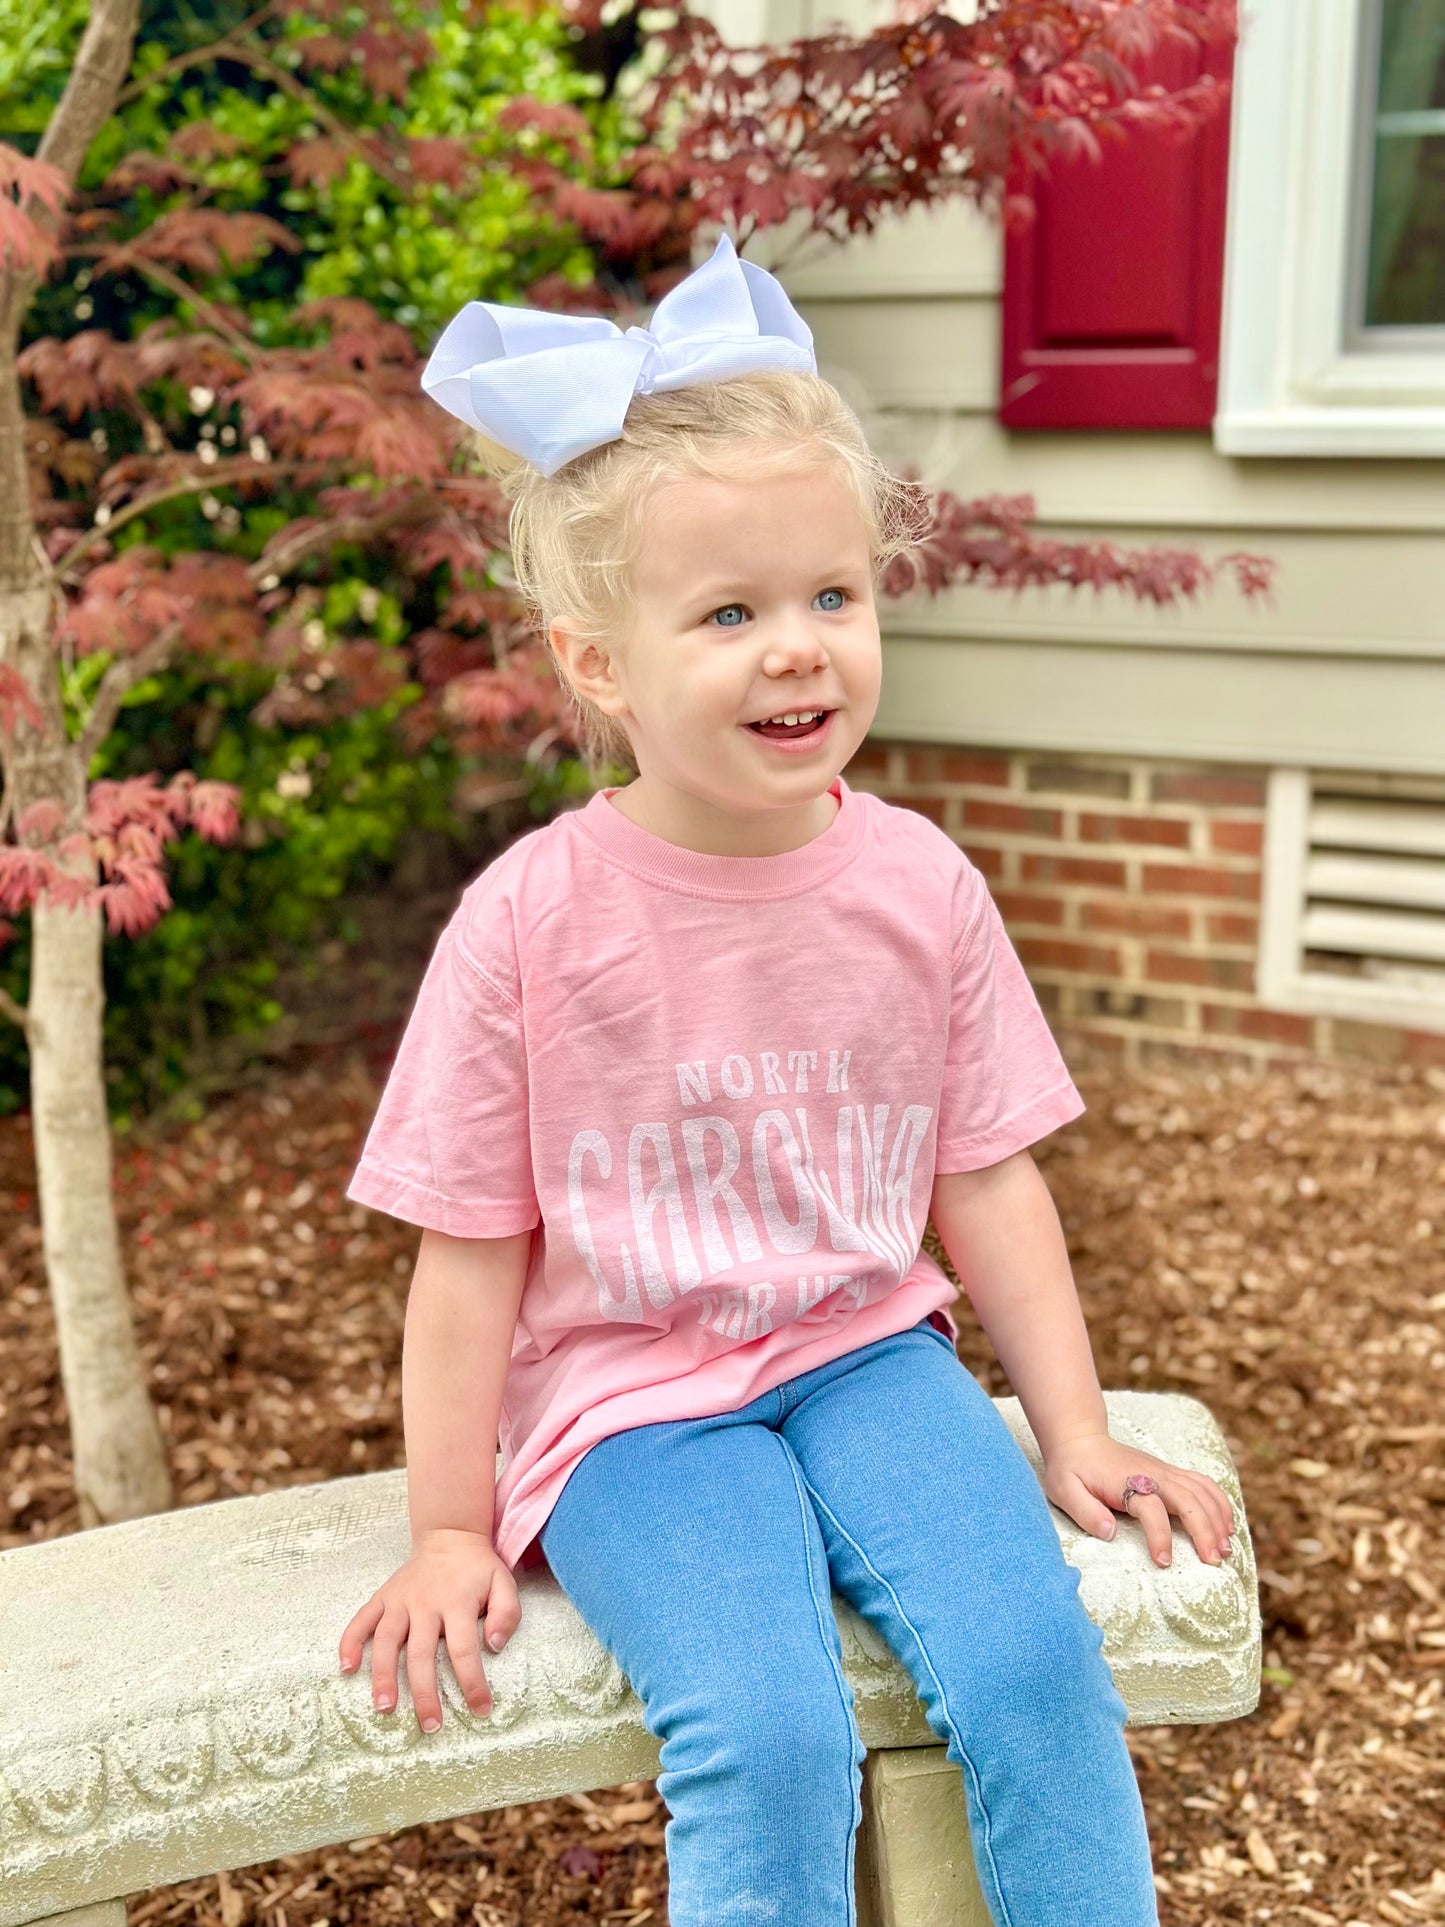 North Carolina Tar Heels Cotton Candy Pink Kid's T-Shirt